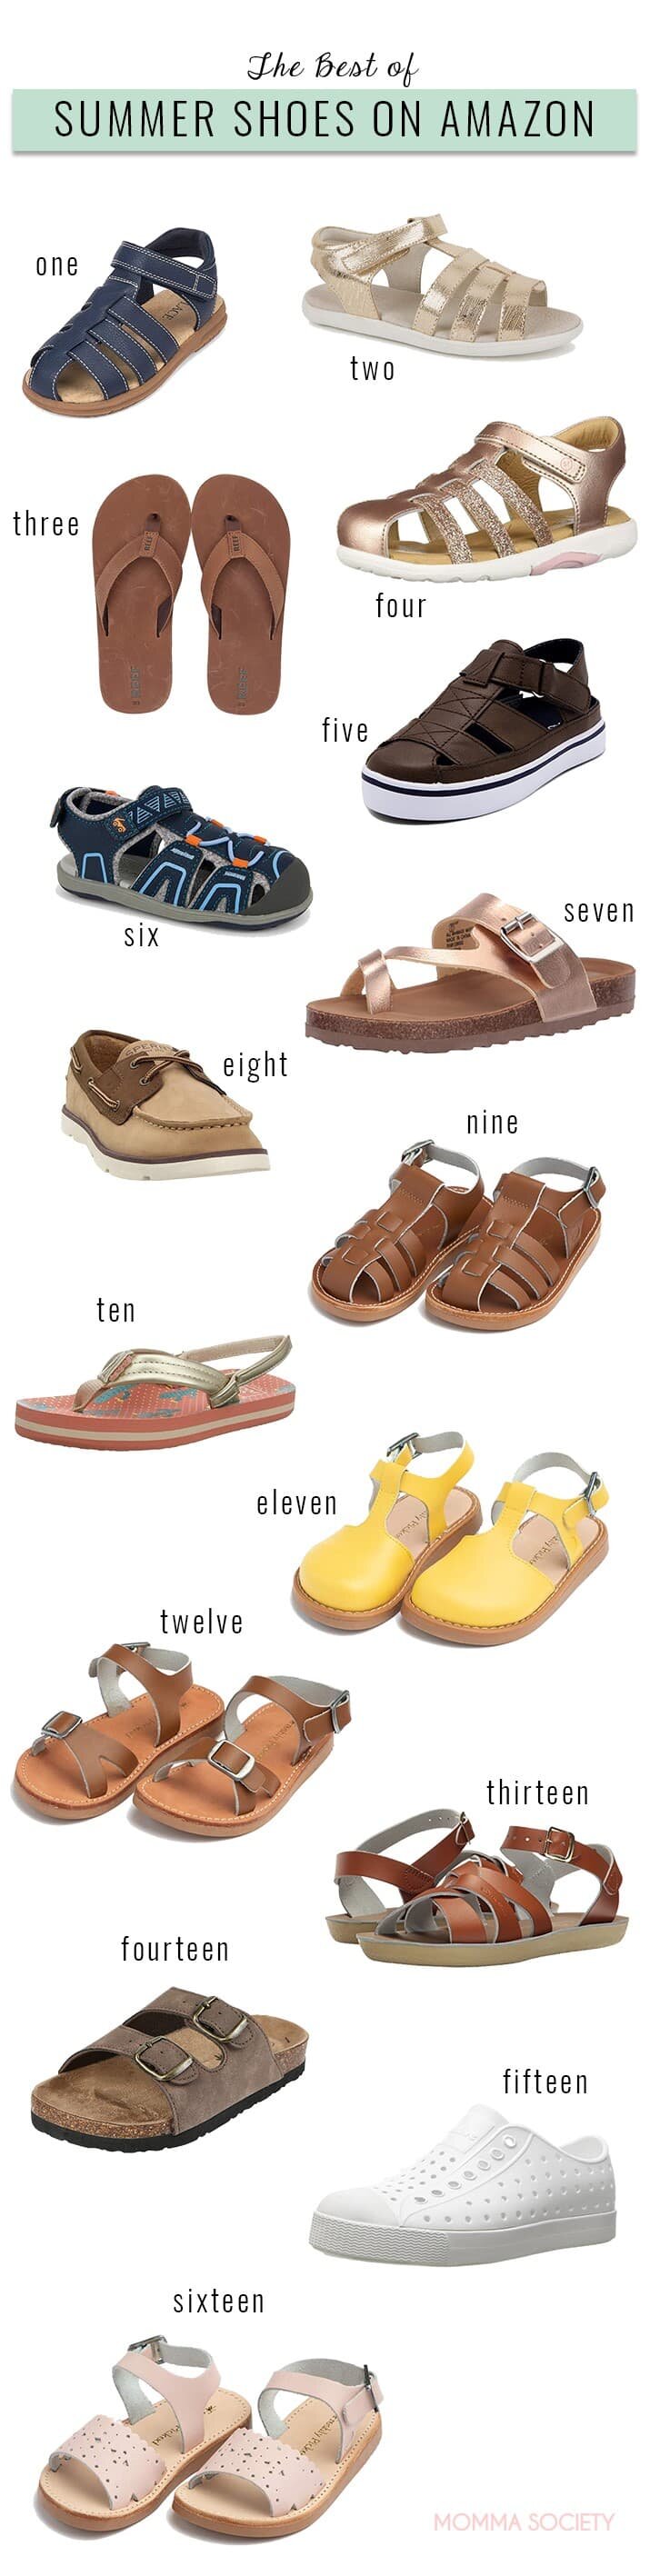 summer shoes on amazon